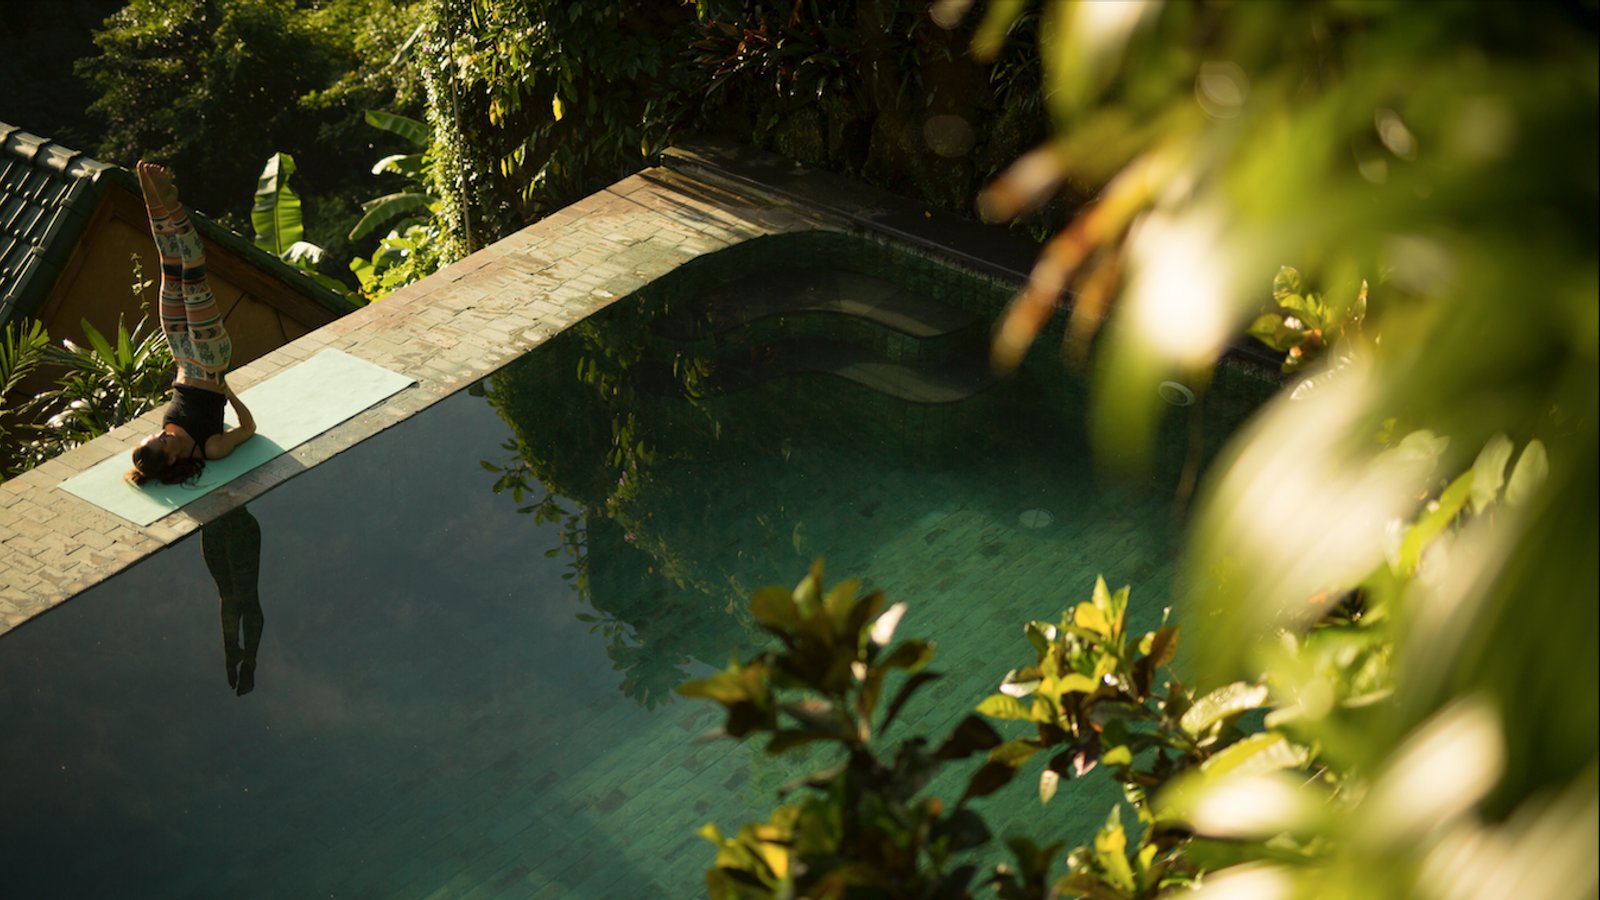 The Best Yoga Retreats in Bali